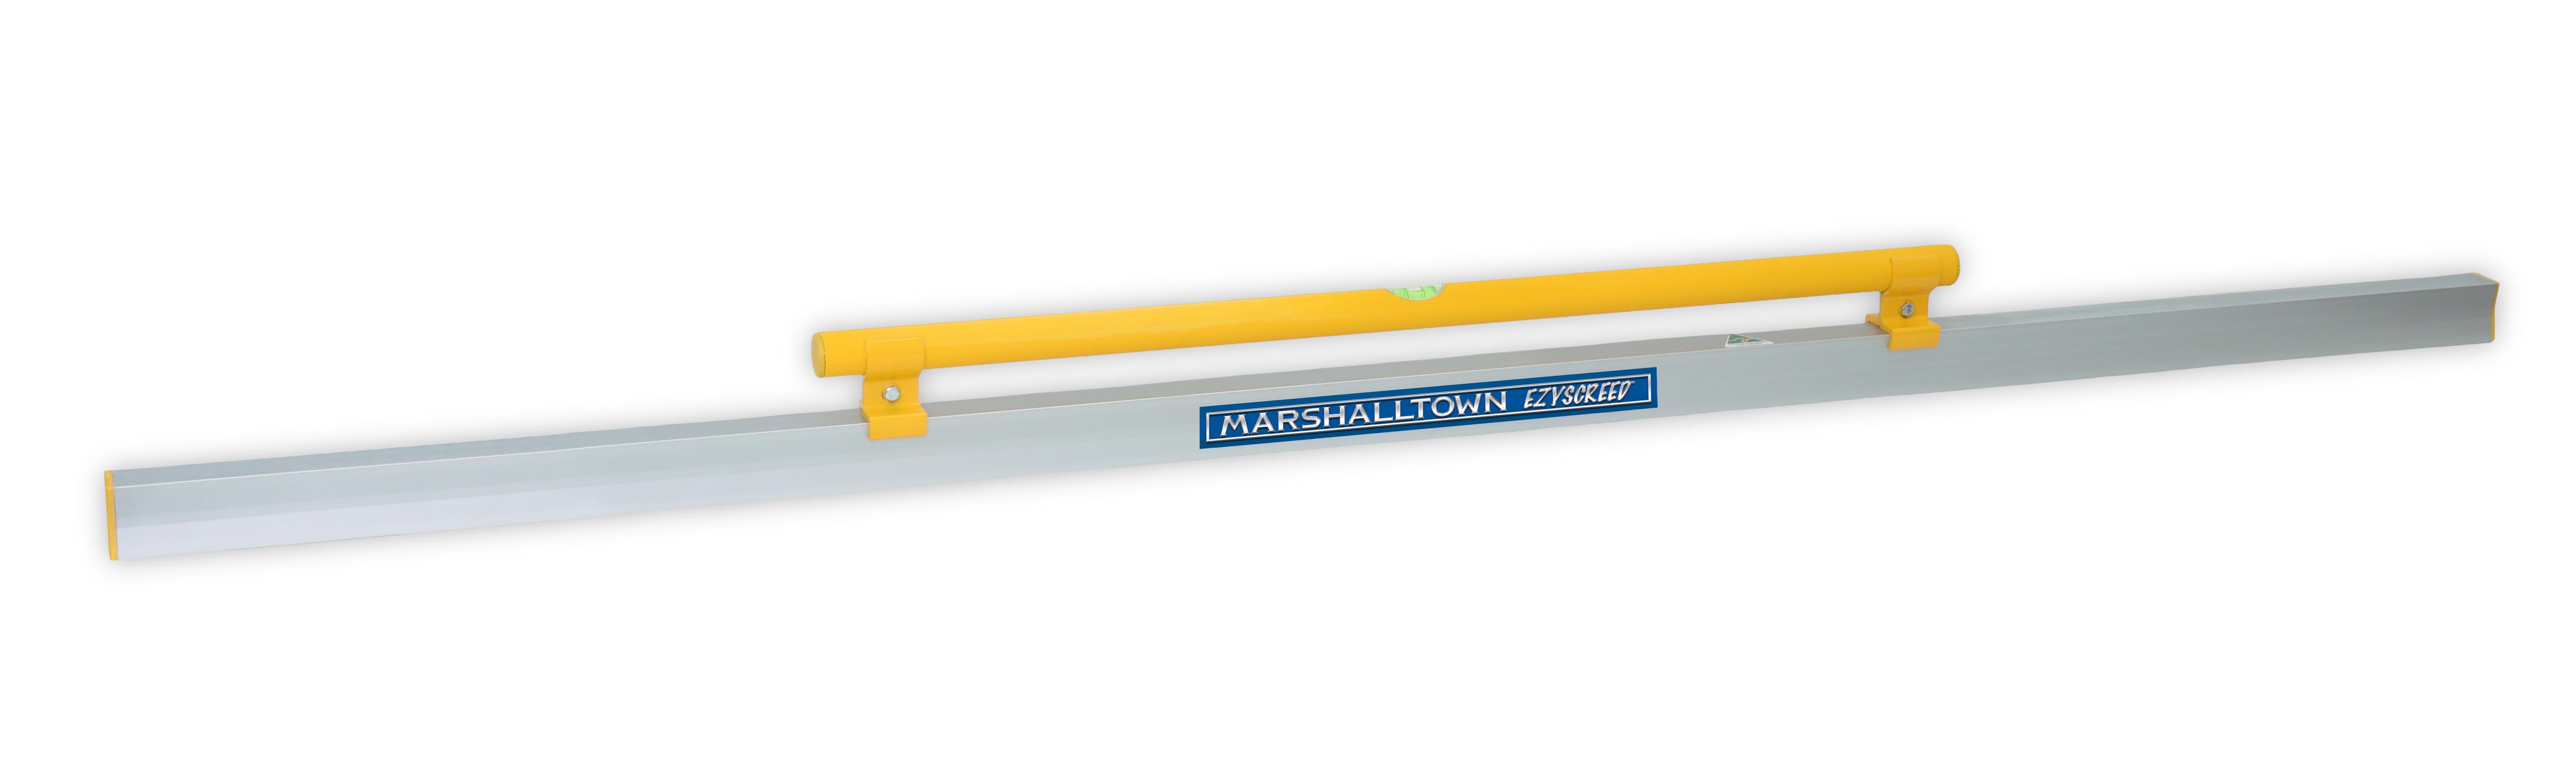 Marshalltown (28401) product